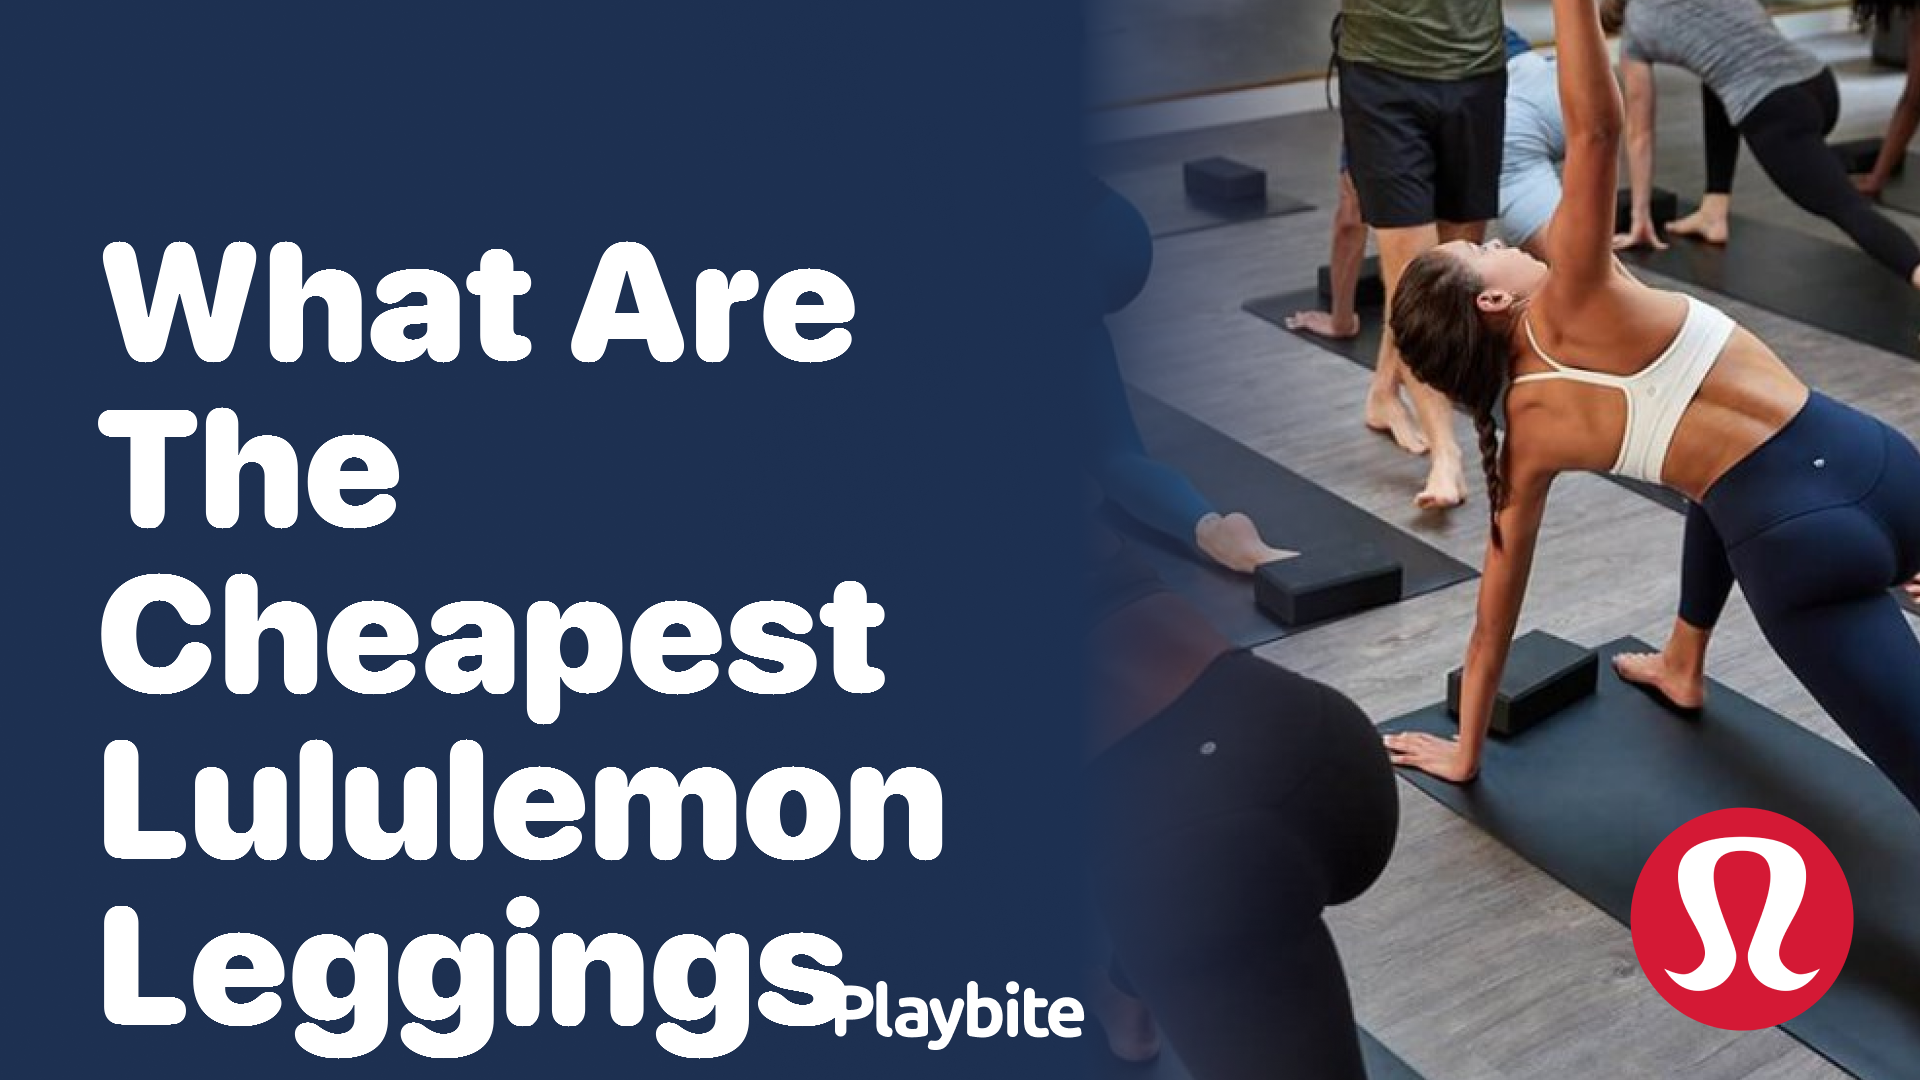 What Are the Cheapest Lululemon Leggings? - Playbite